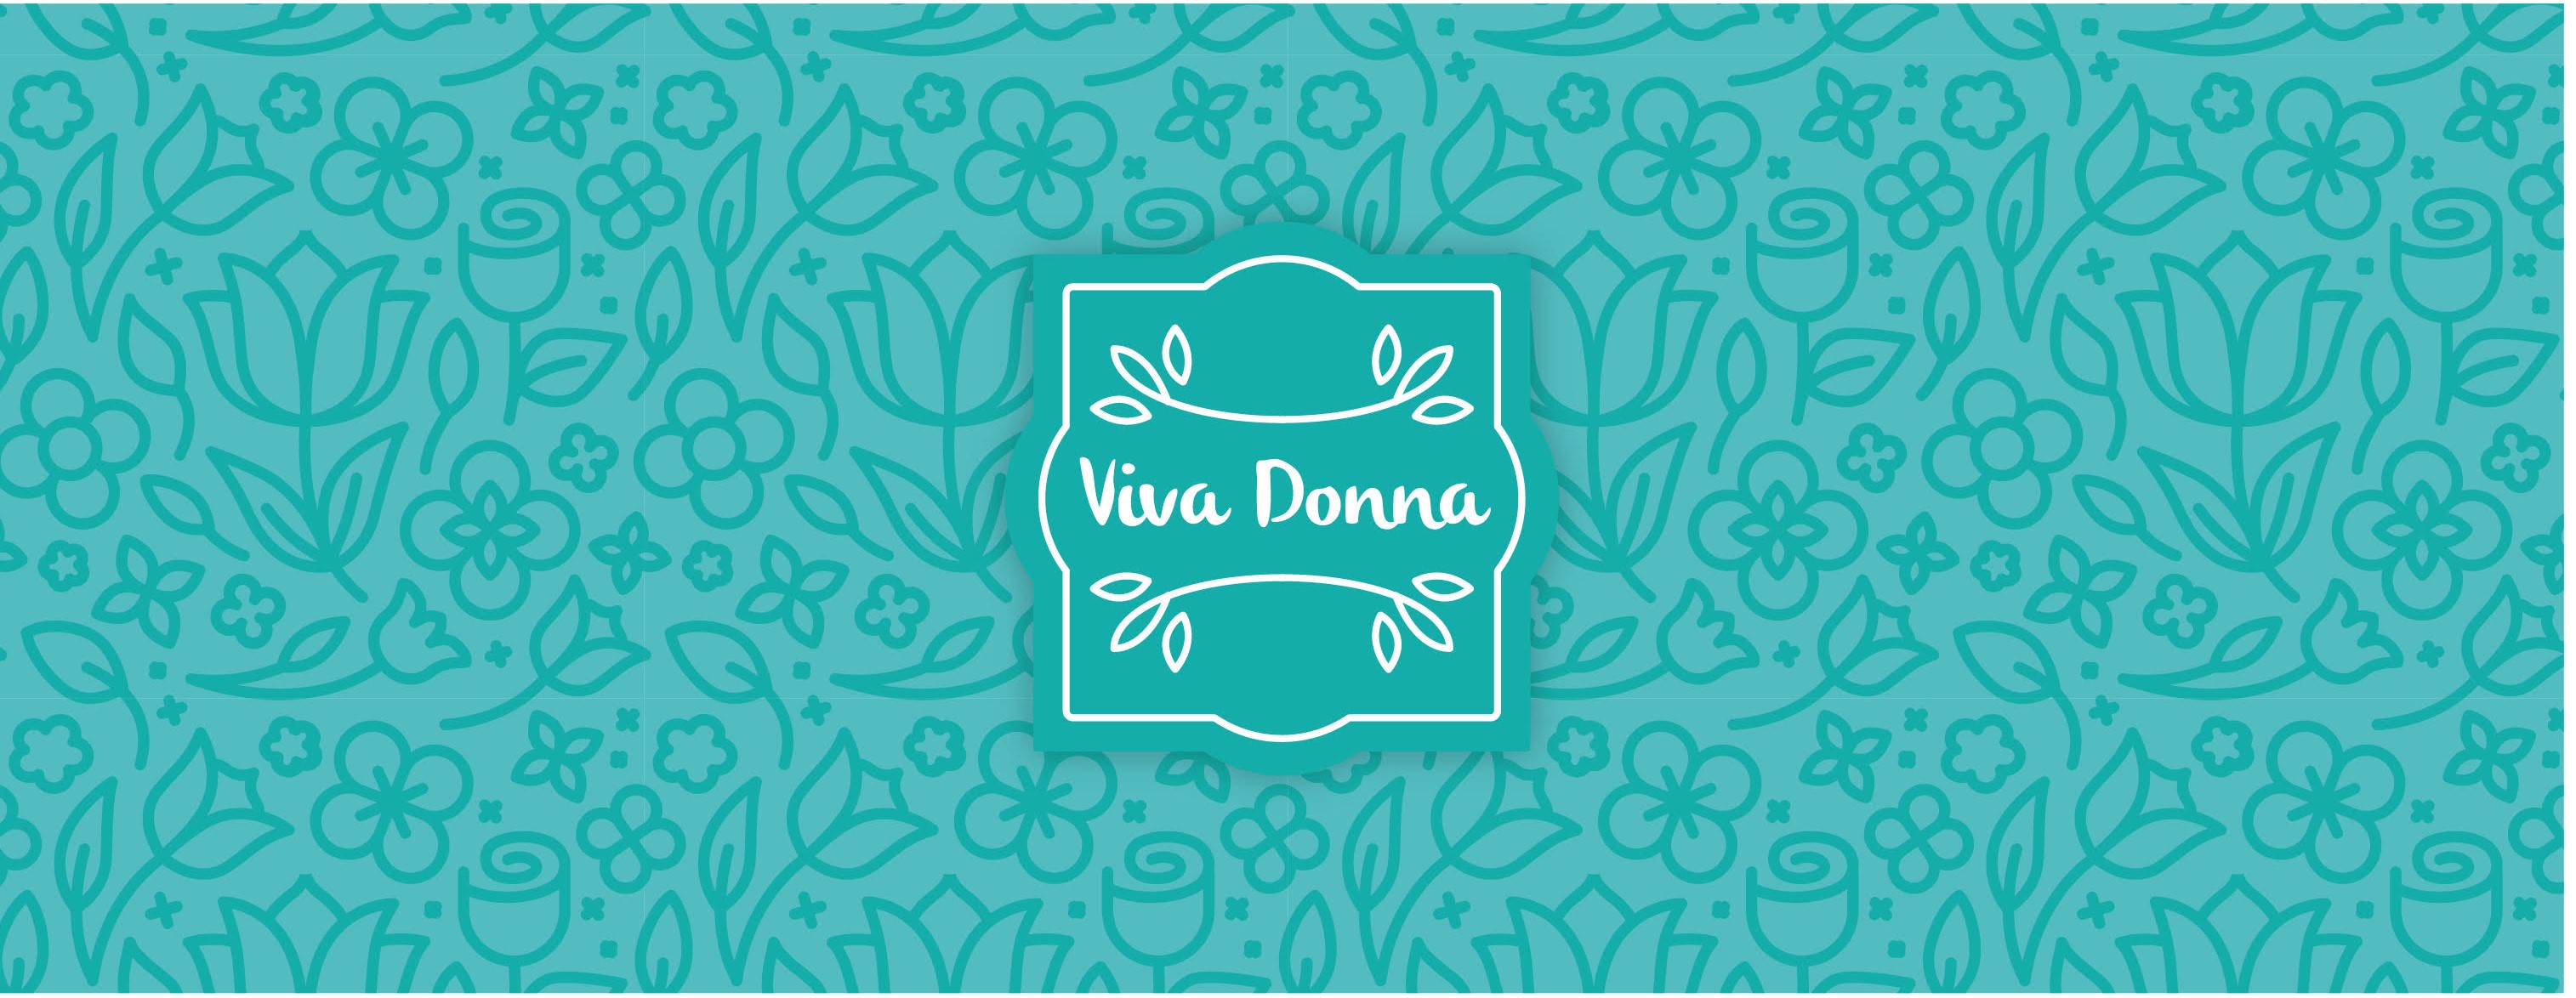 Viva Donna 